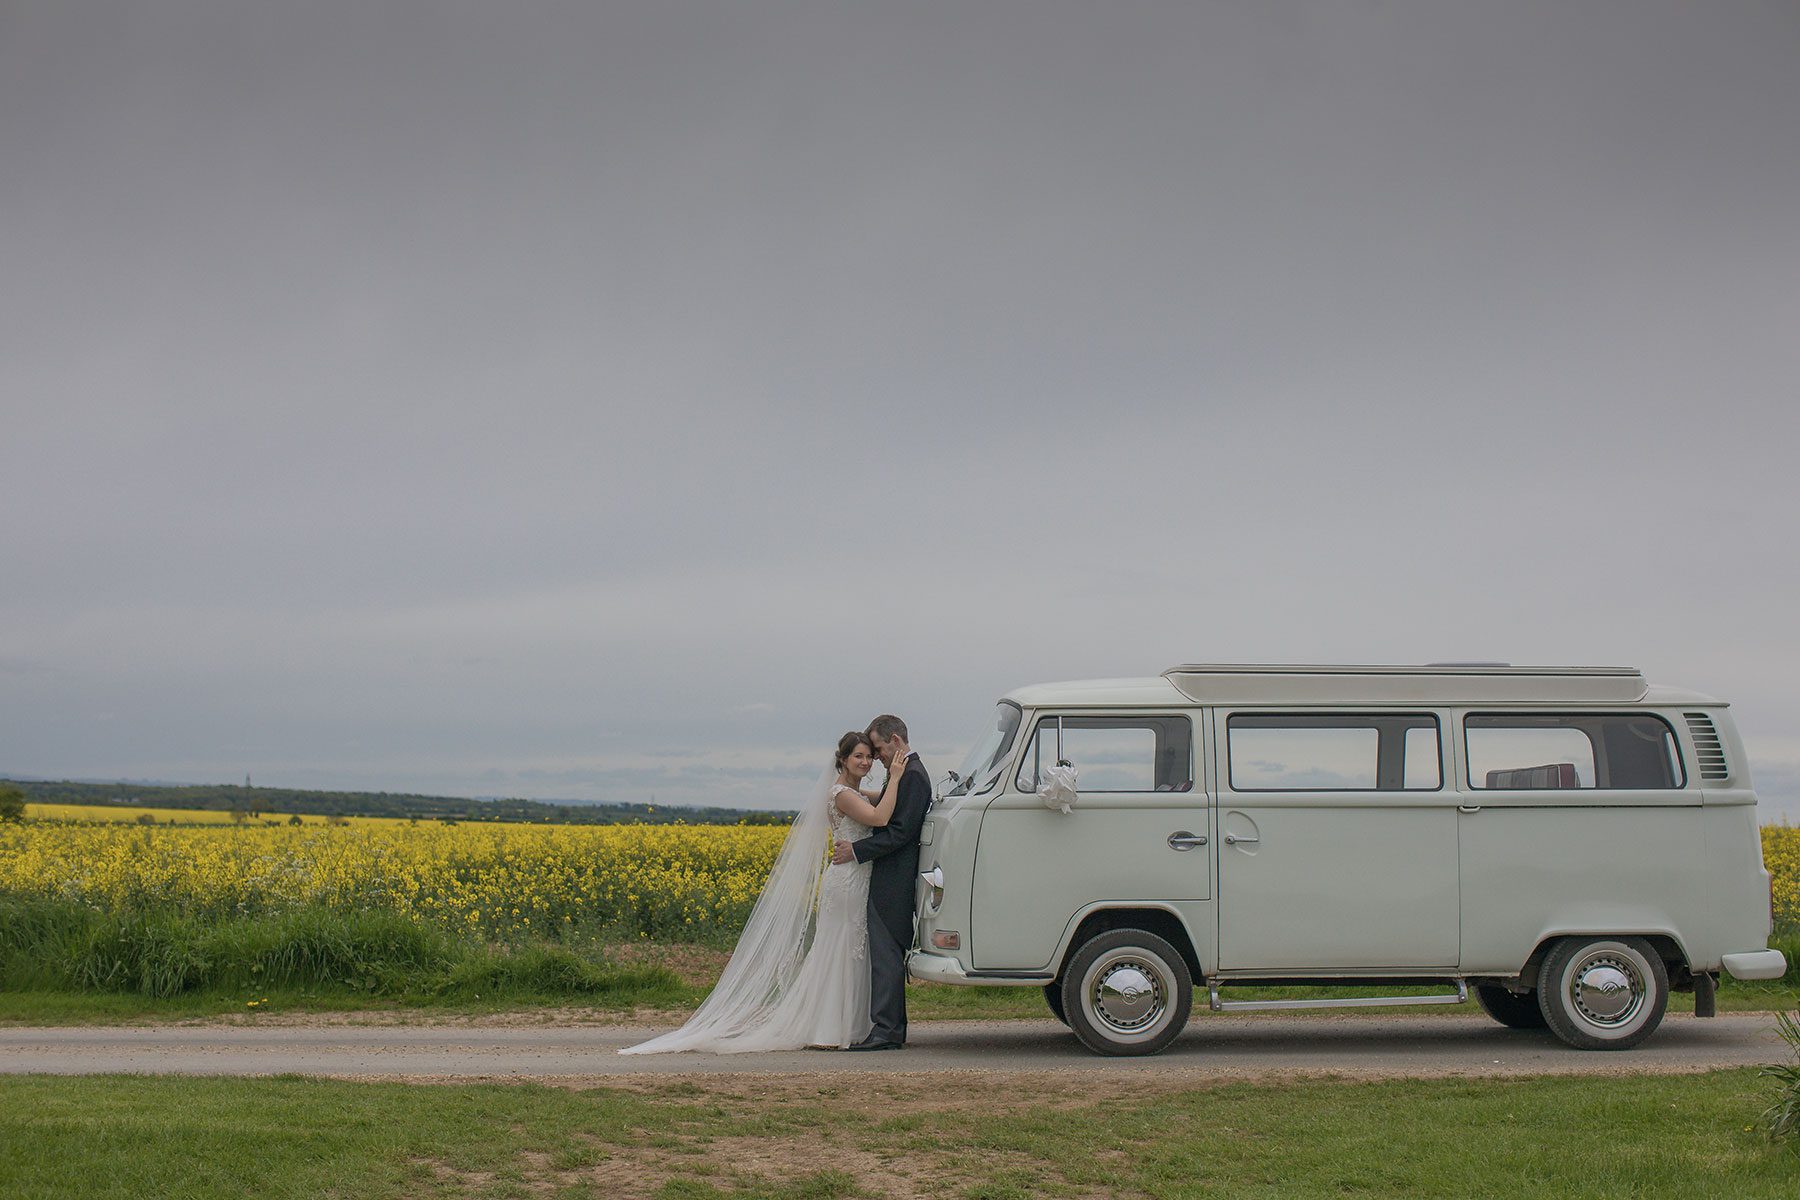 camper van weddings - Wedding Photography in Cheltenham, Cripps Stone Barn | Bullit Photography